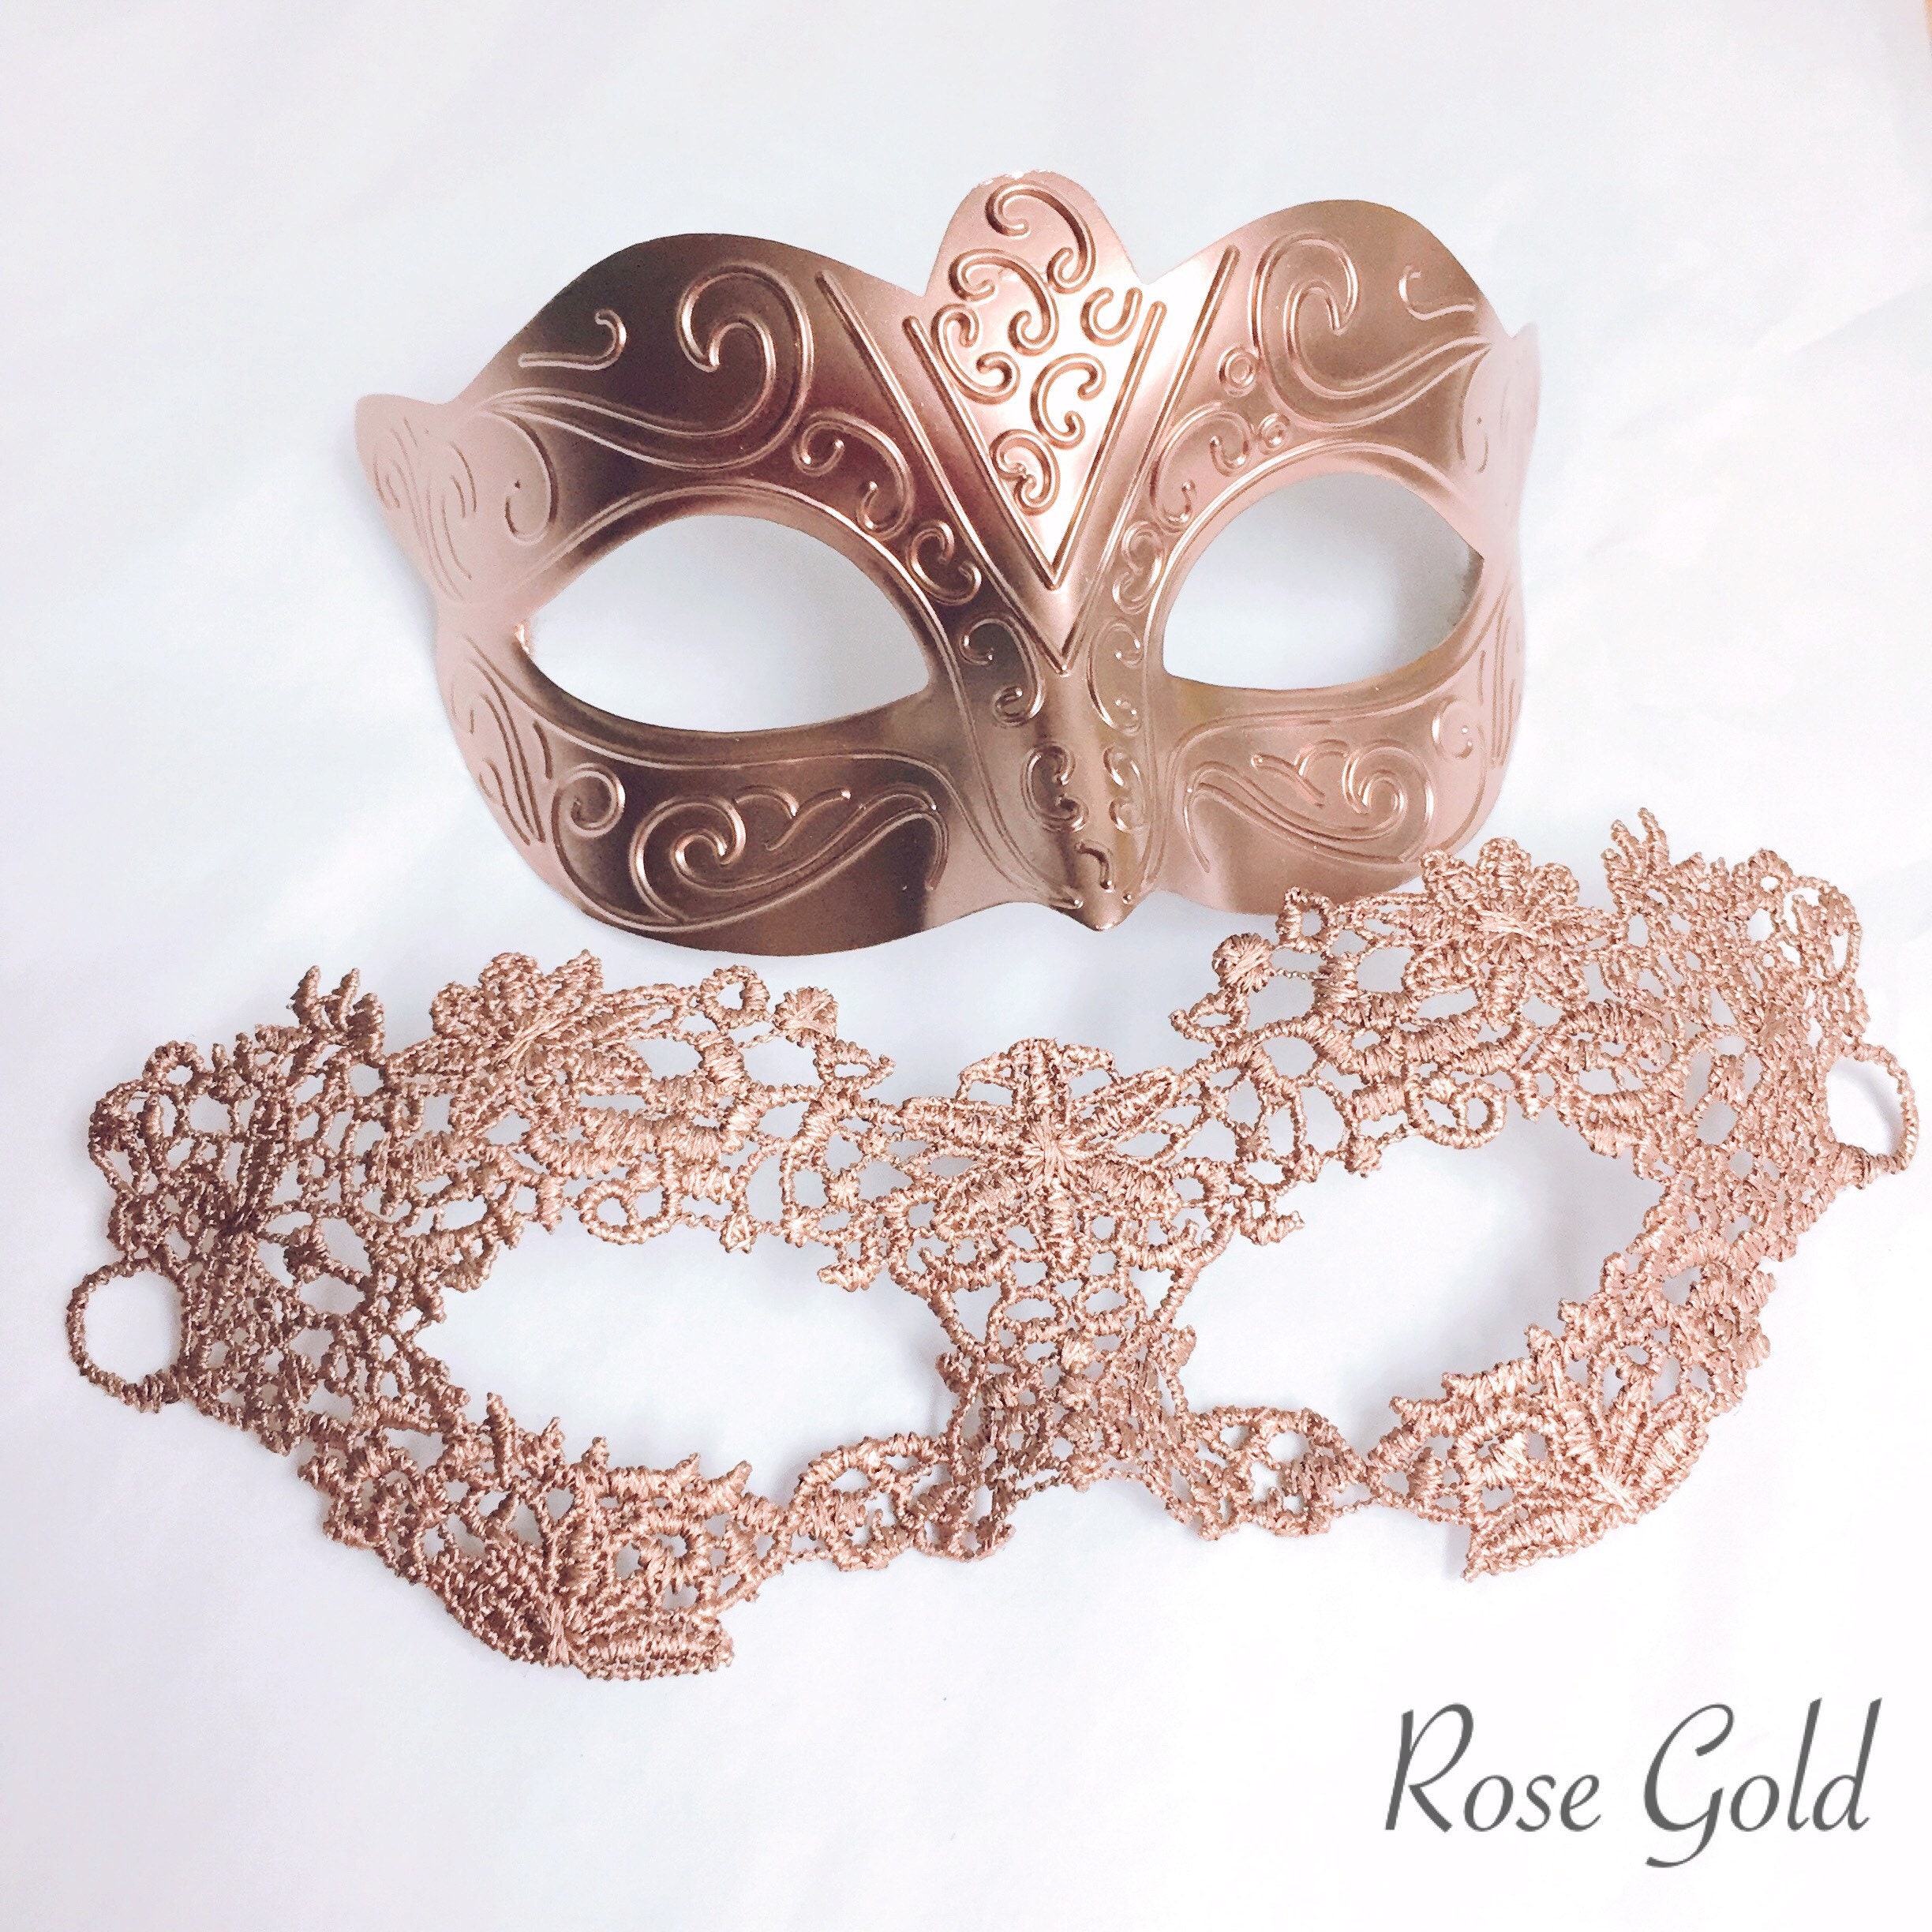 Masquerade Mask For Women Christmas Women Flower Half-face Masks